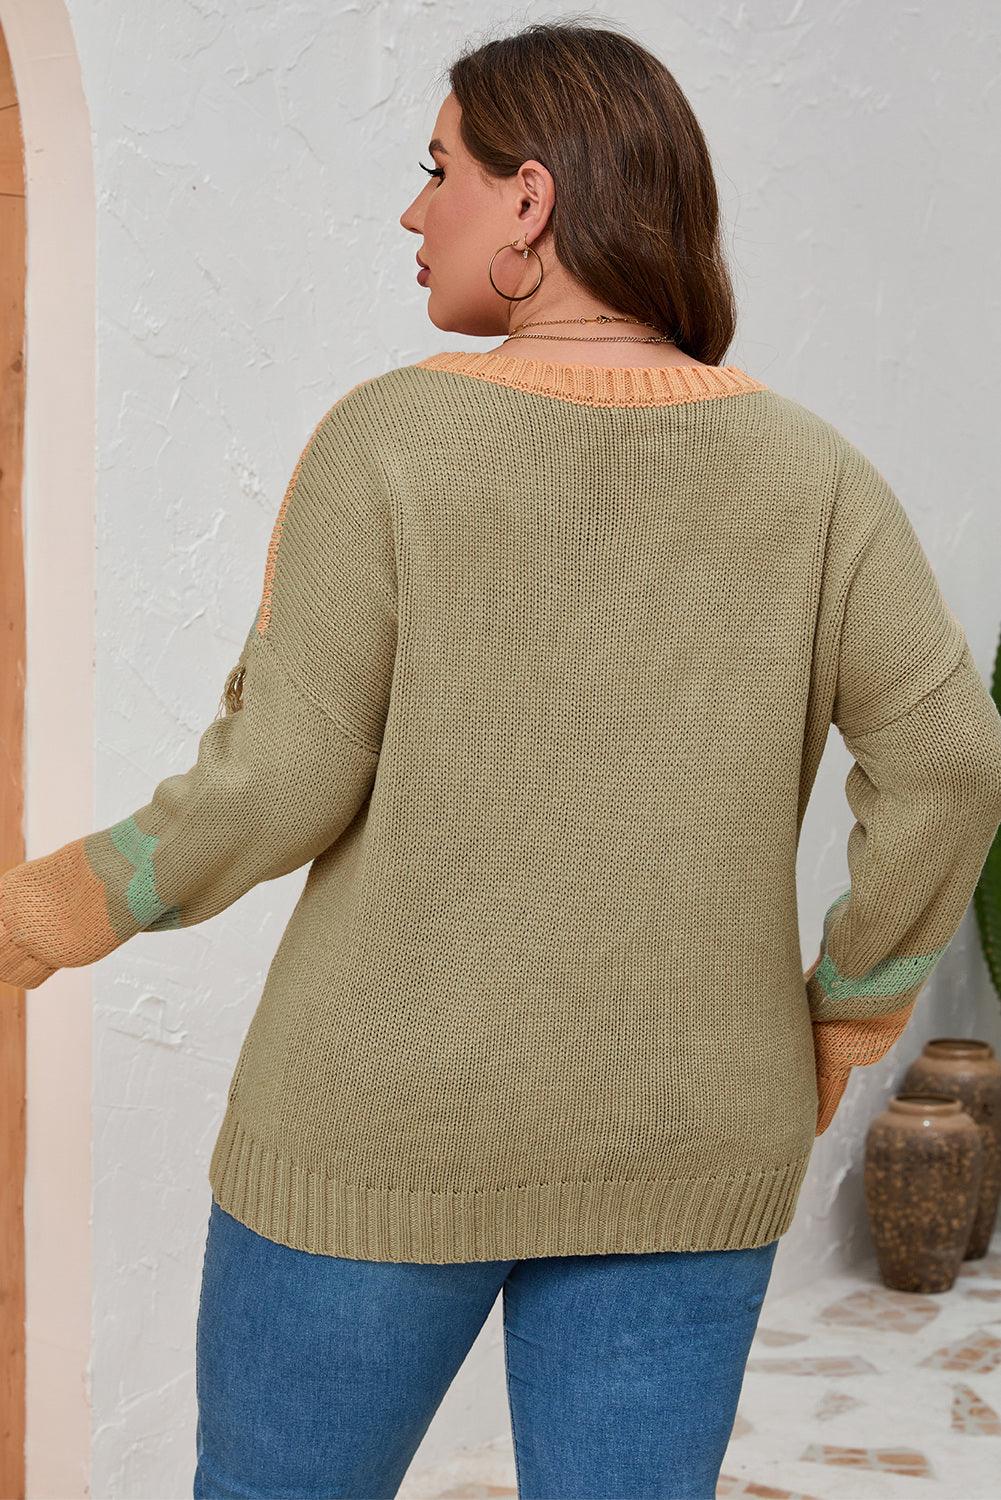 Plus Size Fringe Detail Round Neck Long Sleeve Sweater - Crazy Like a Daisy Boutique #